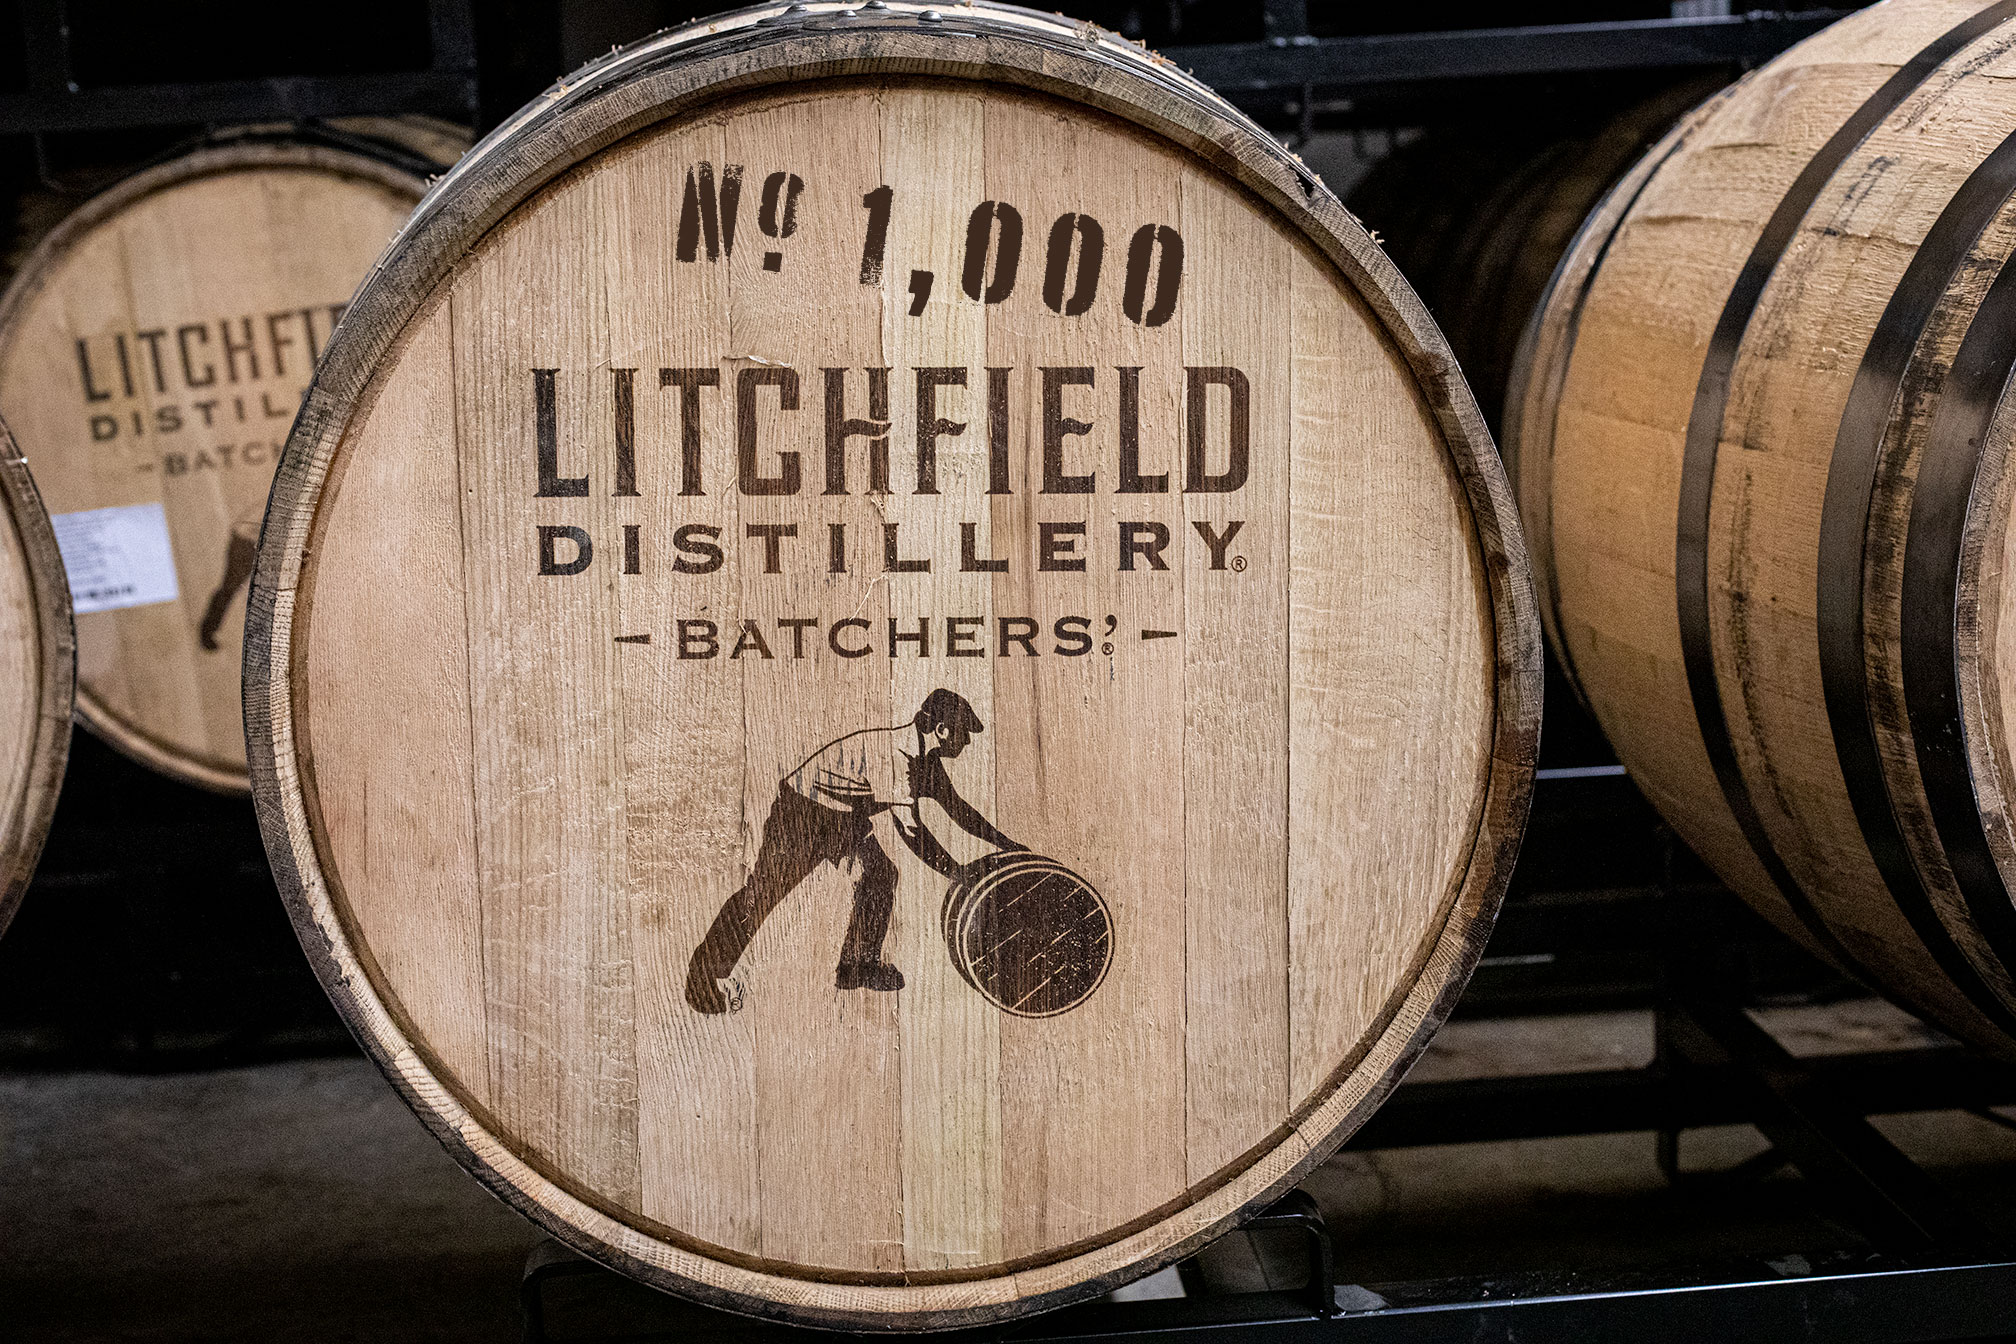 Litchfield Distillery's 1,000th Barrel